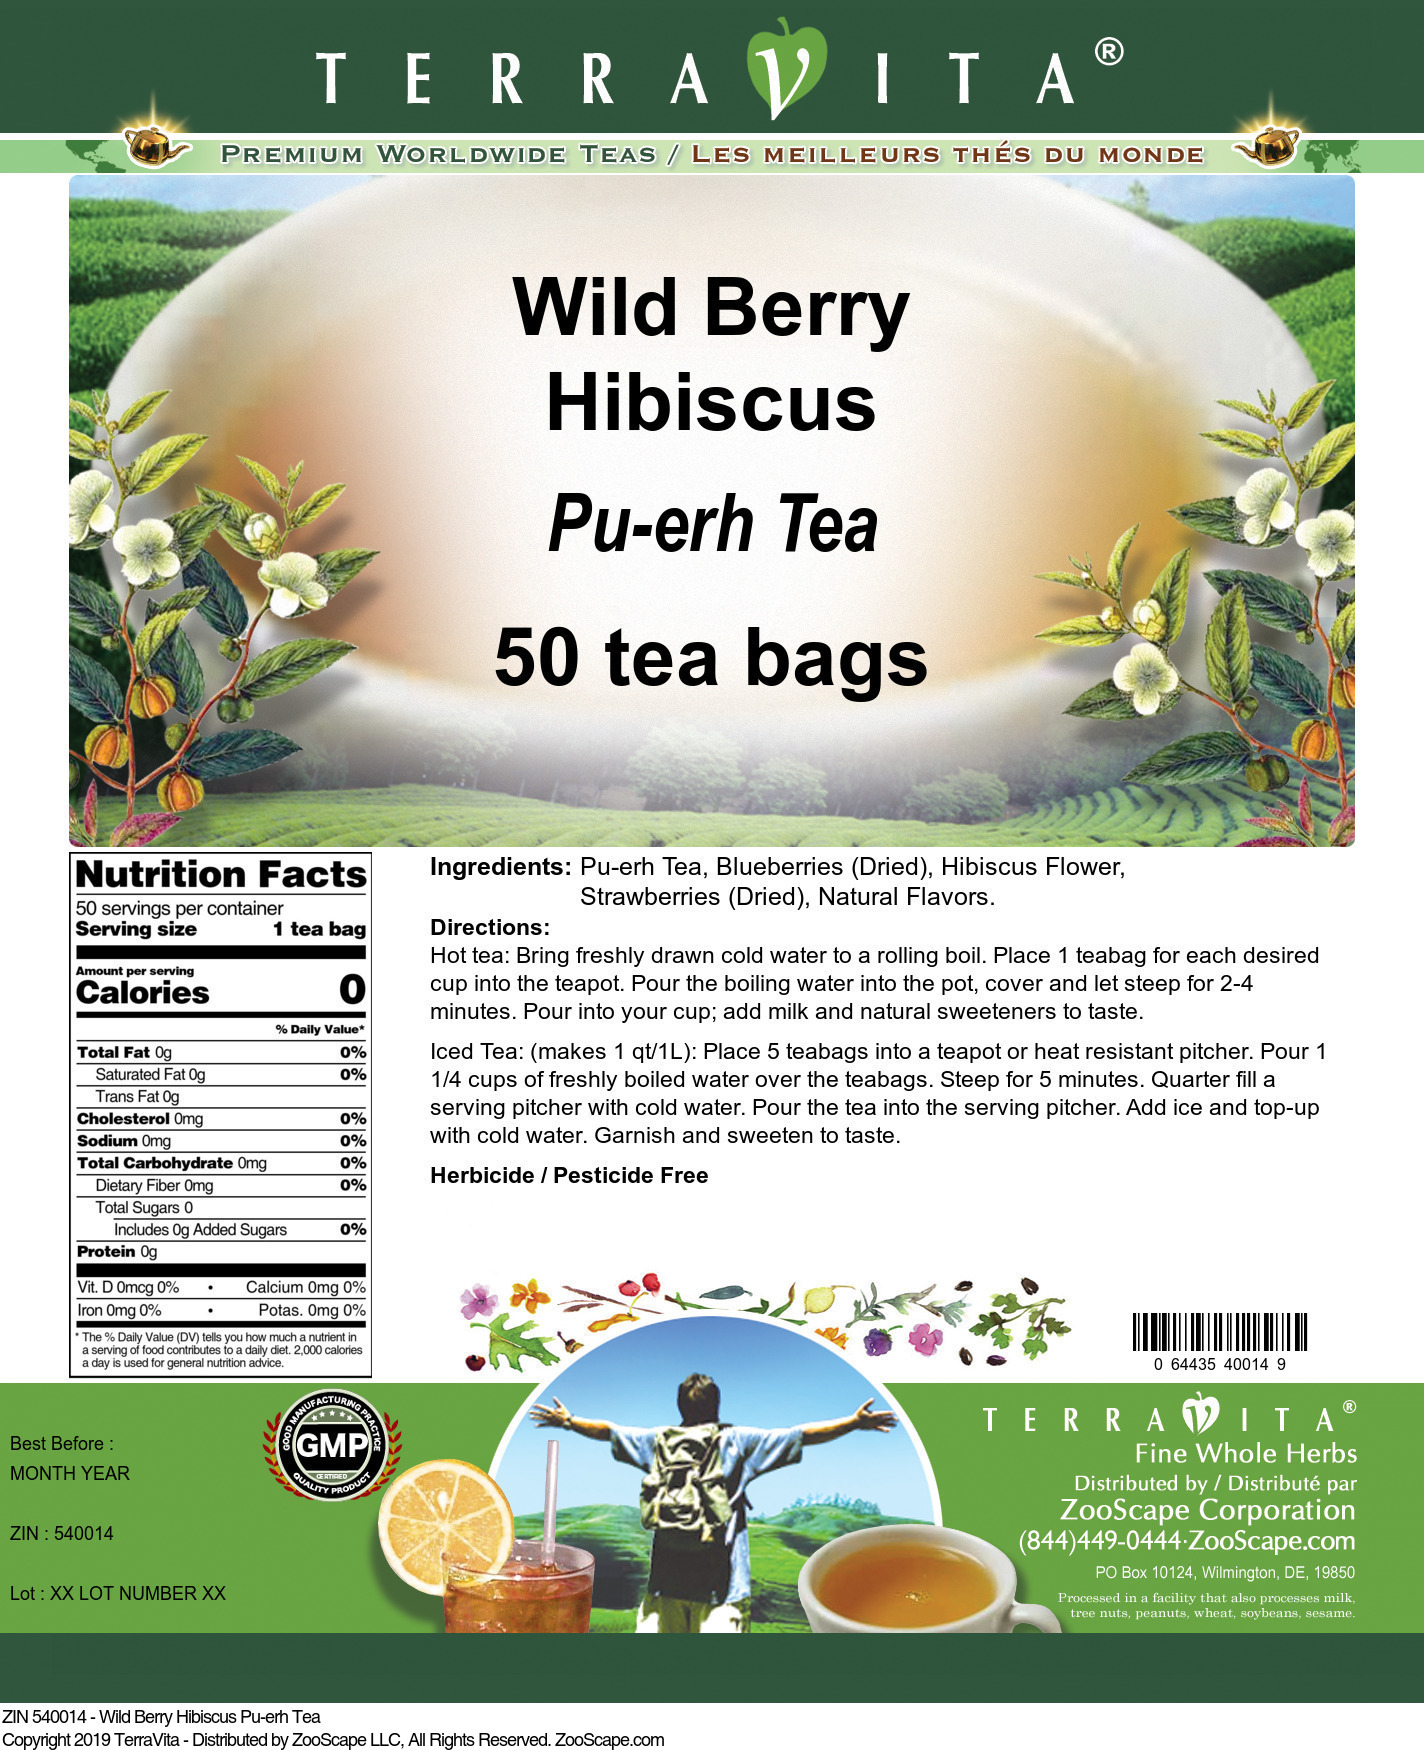 Wild Berry Hibiscus Pu-erh Tea - Label